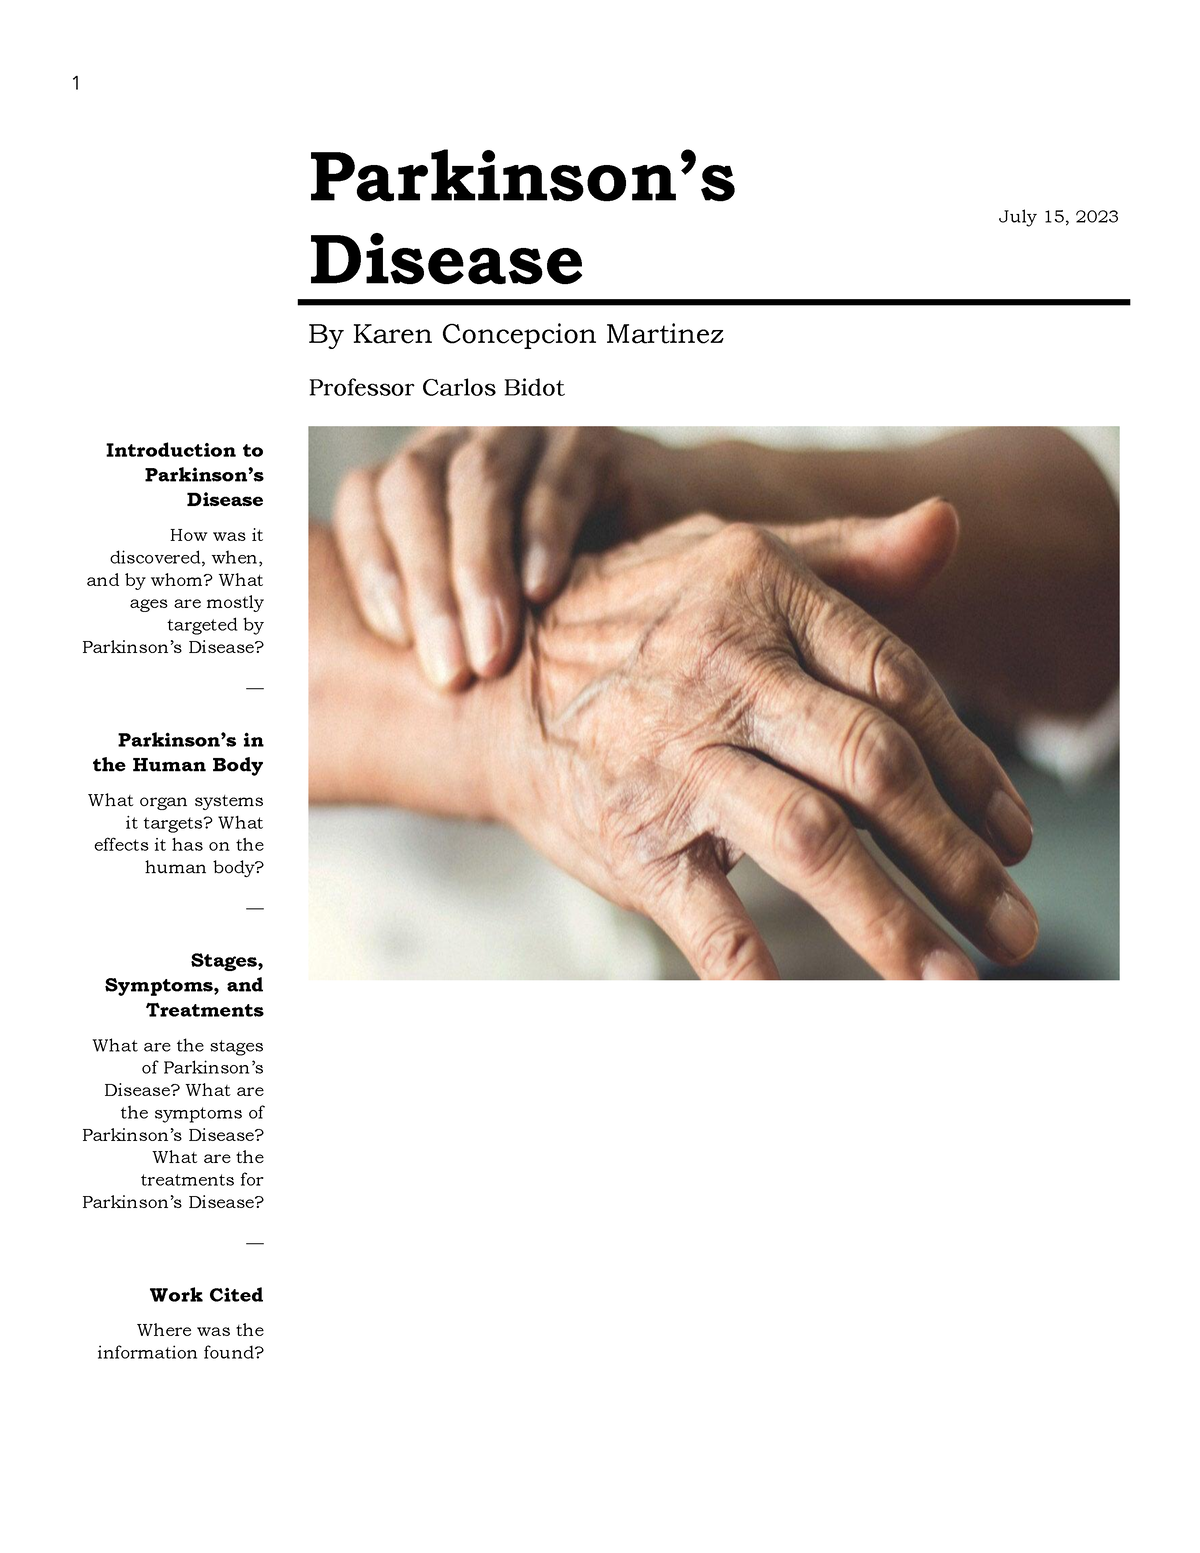 Parkinson's Disease Research Paper - BSC2085 - MDC - Studocu